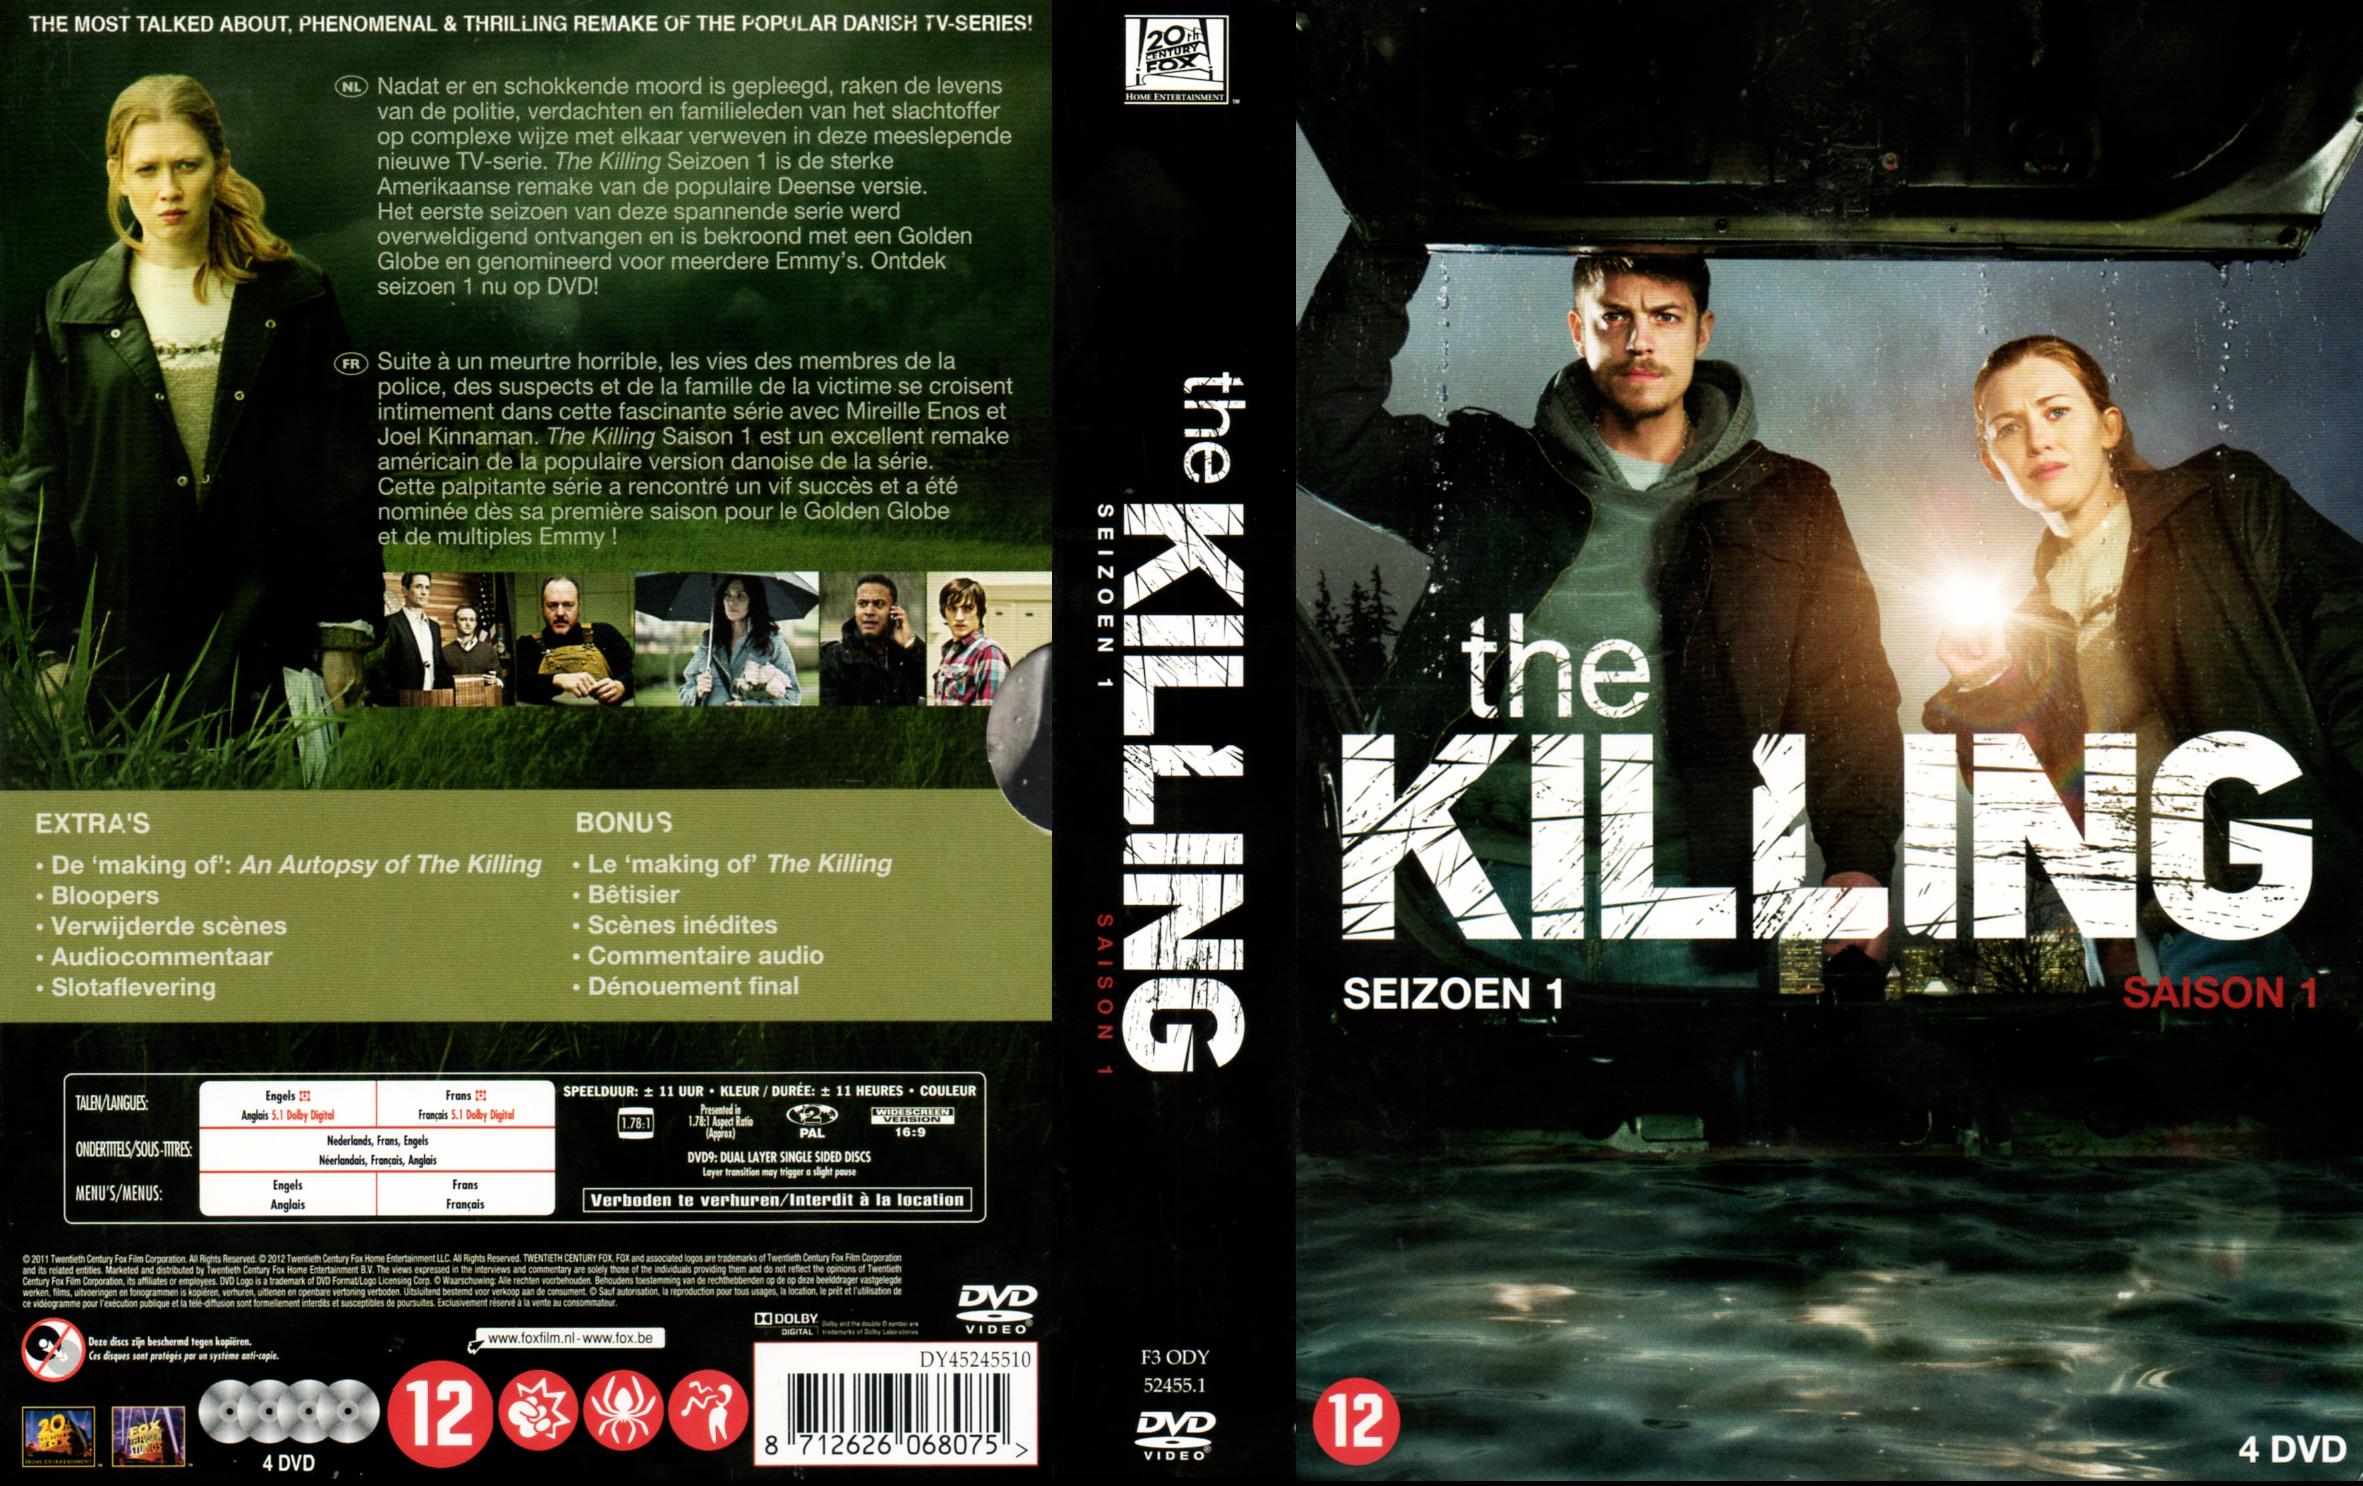 Jaquette DVD The Killing (US) Saison 1 v2